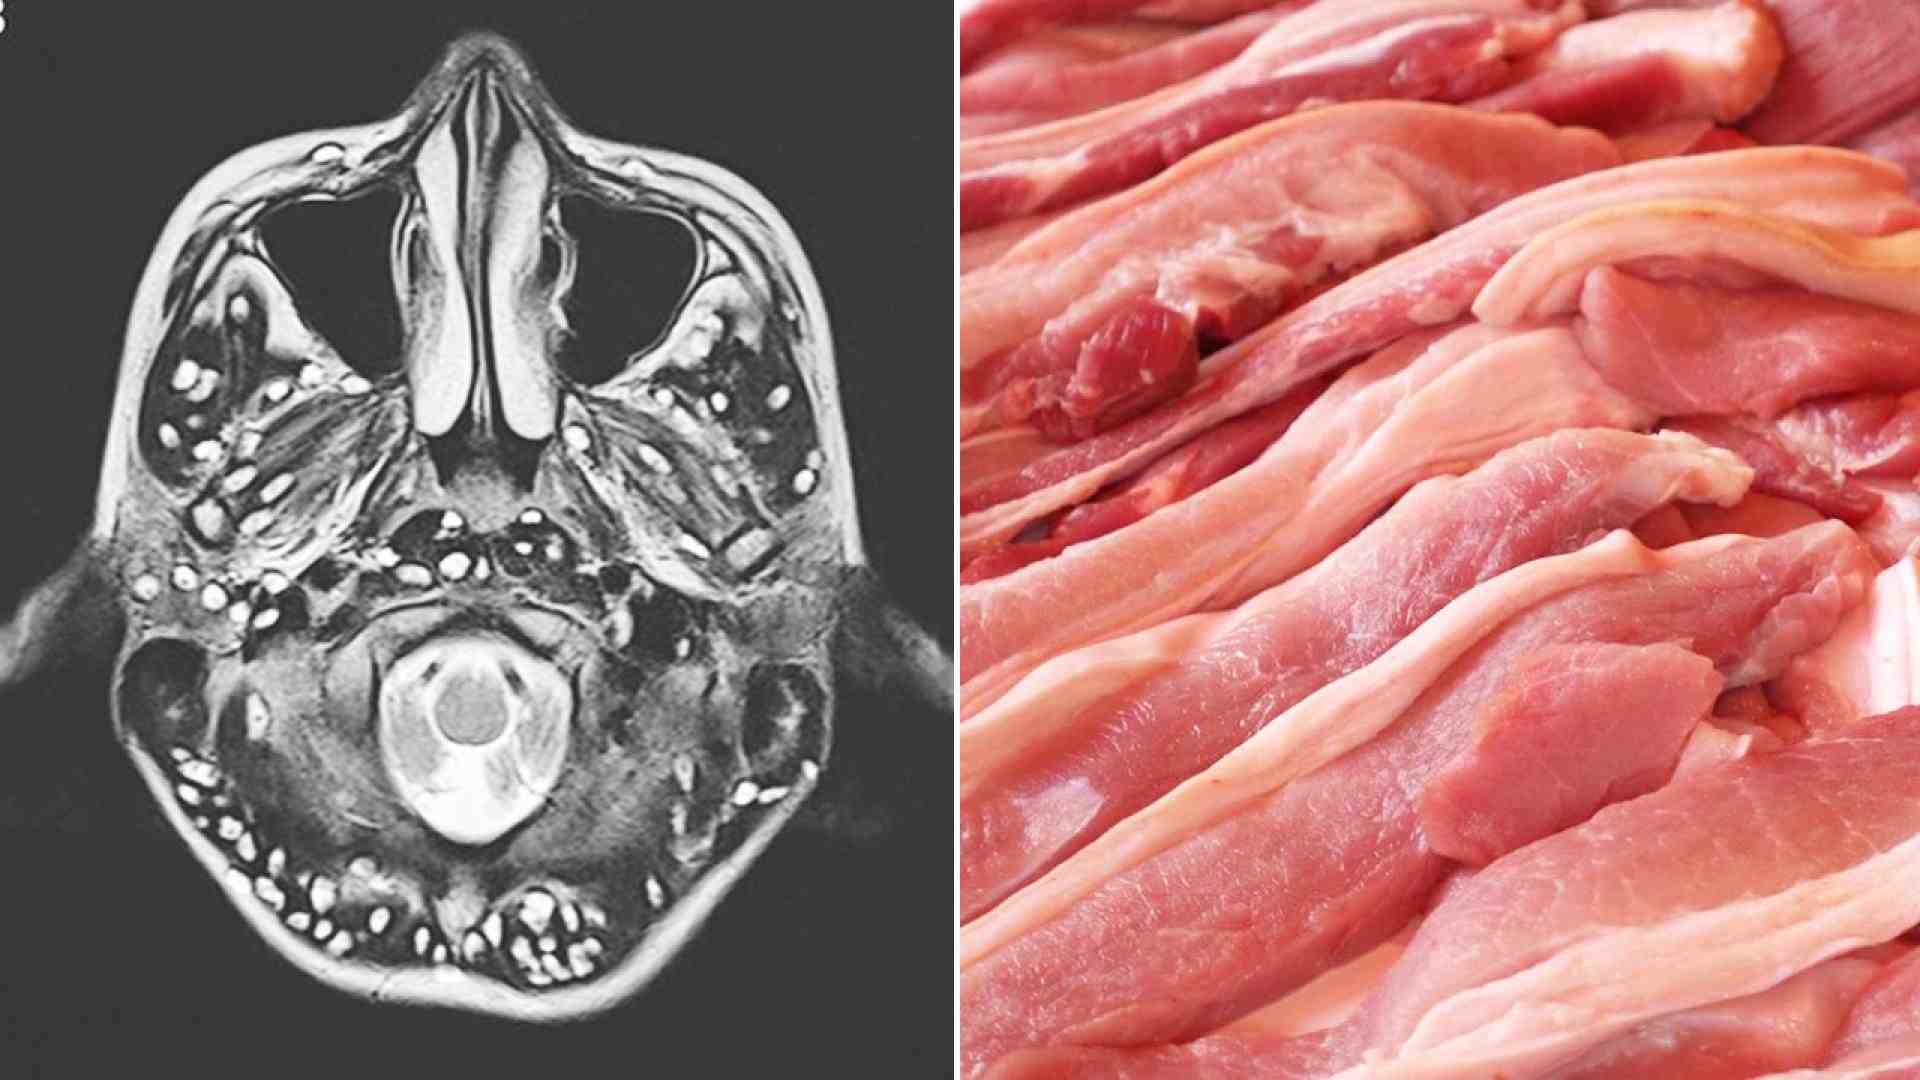 Can pork be medium rare?